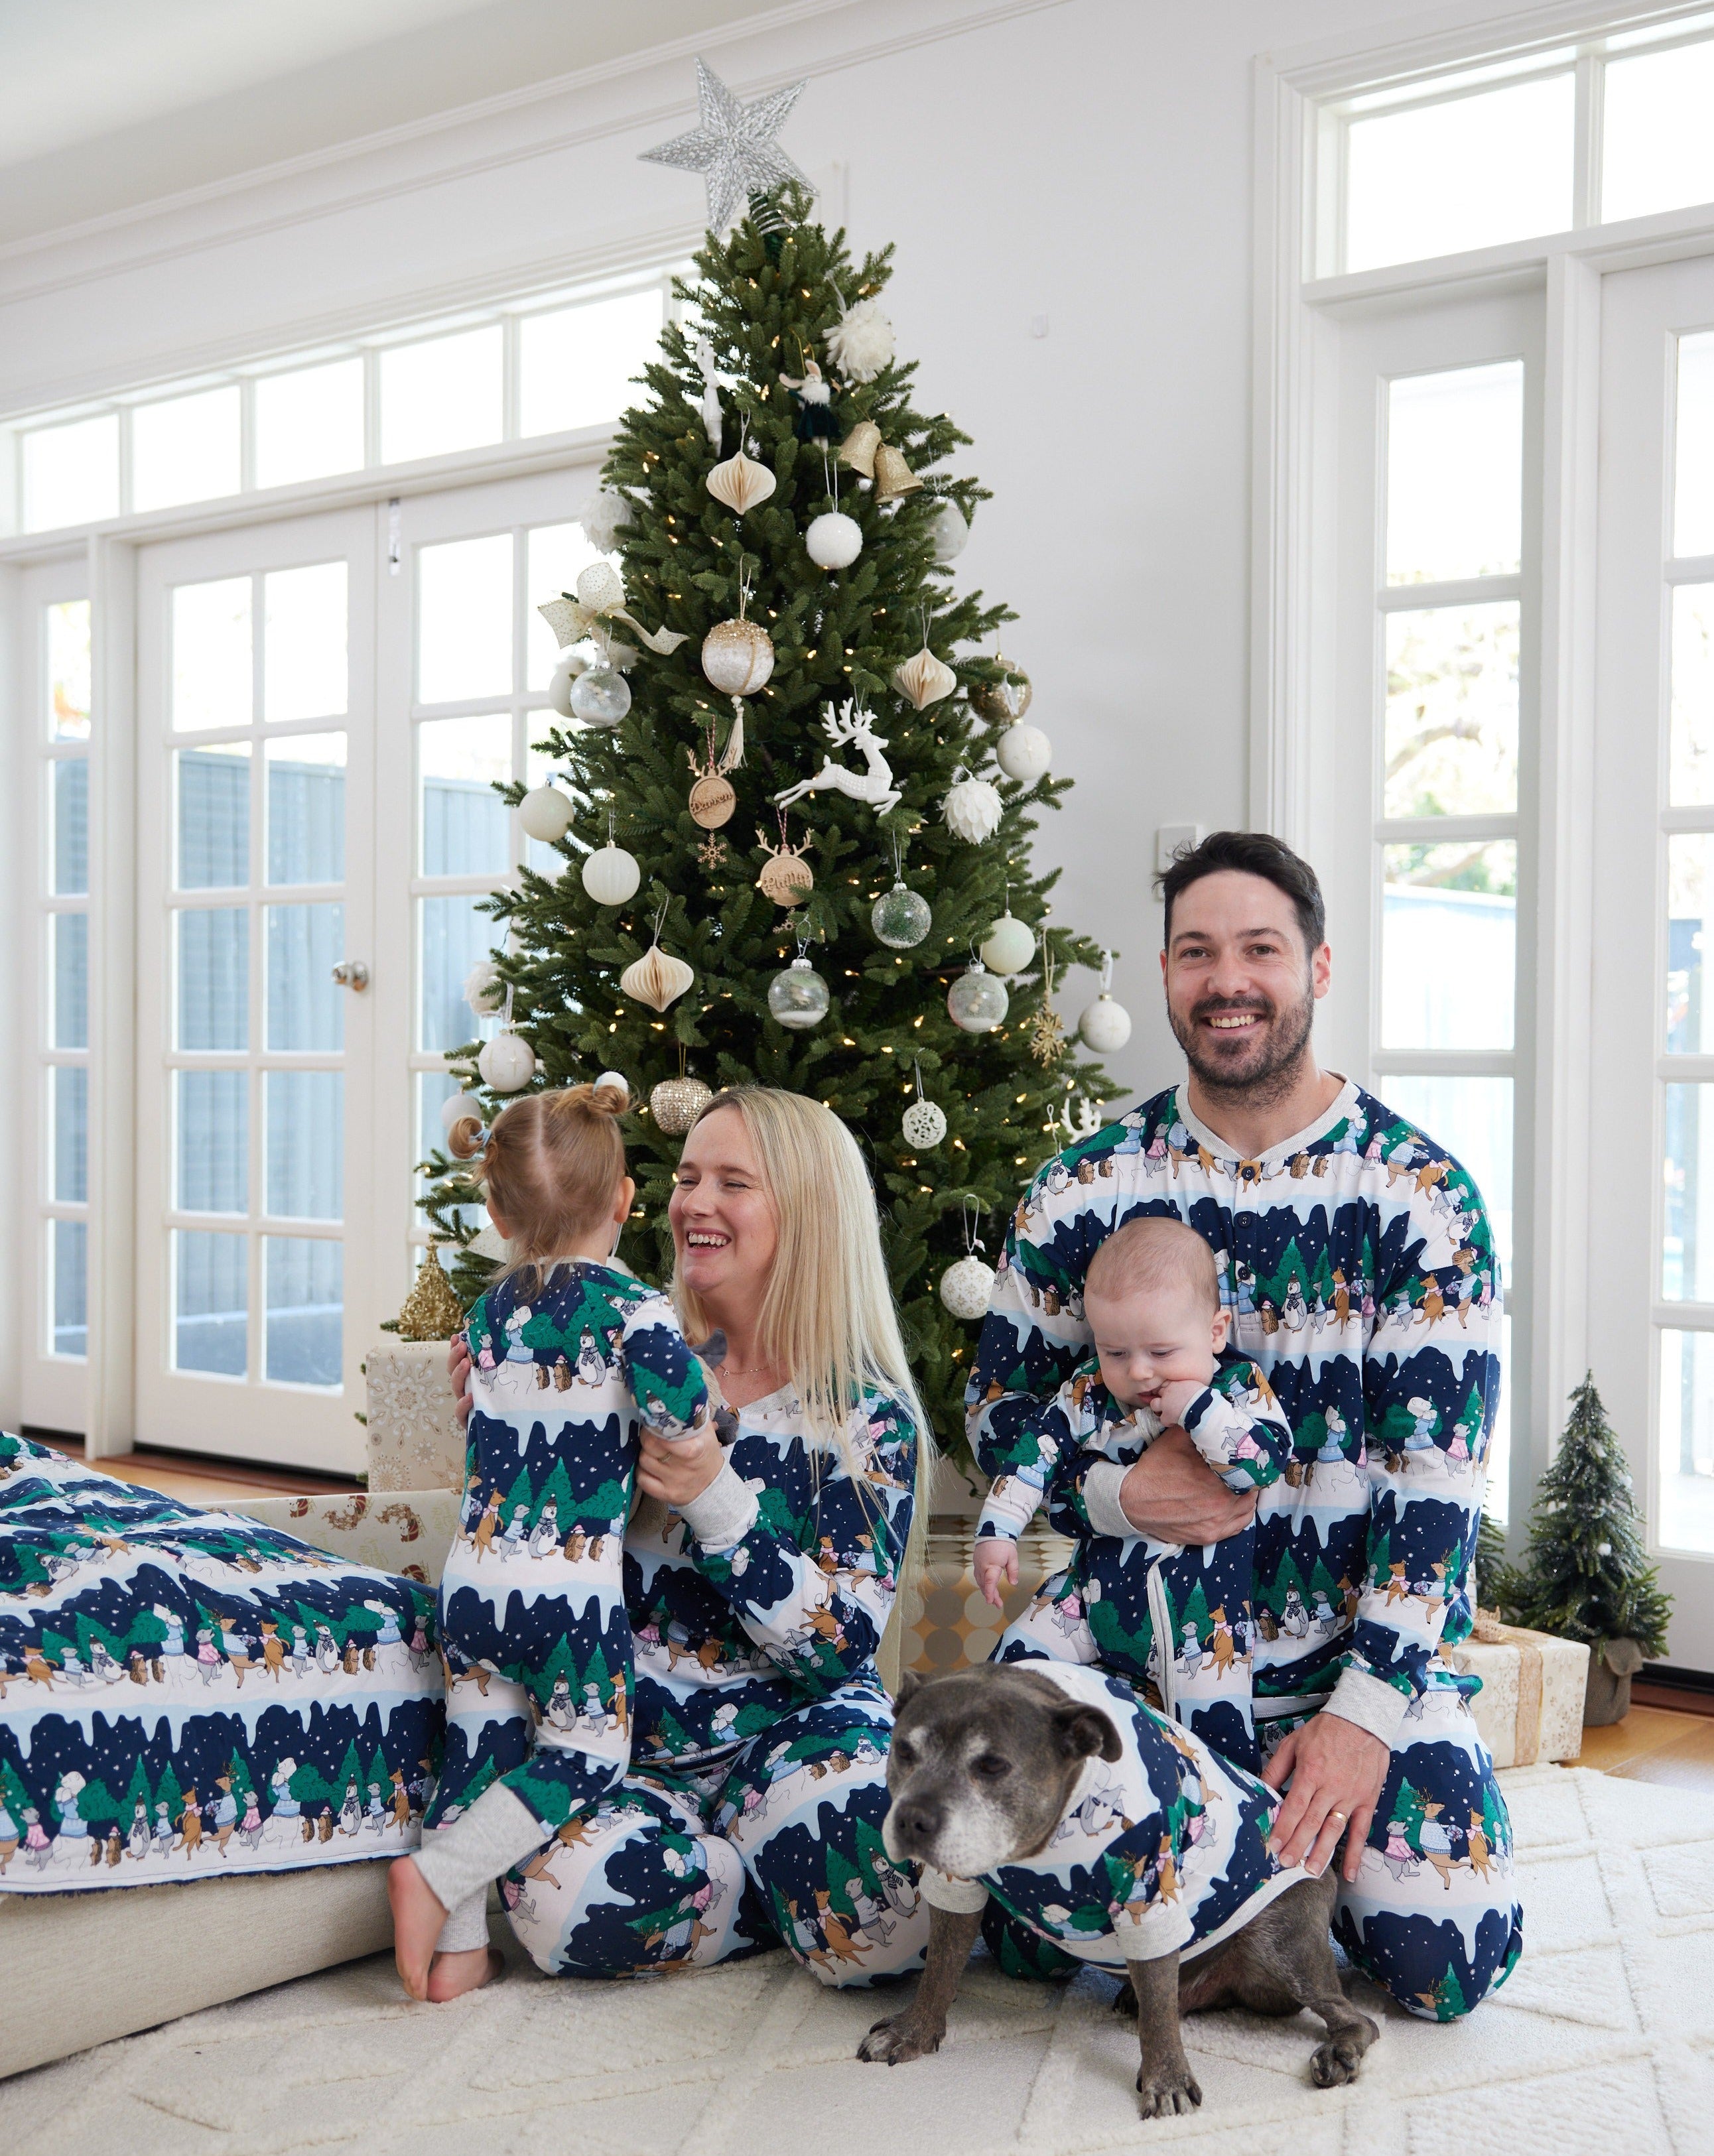 Darren and Phillip matching family Christmas pyjamas.